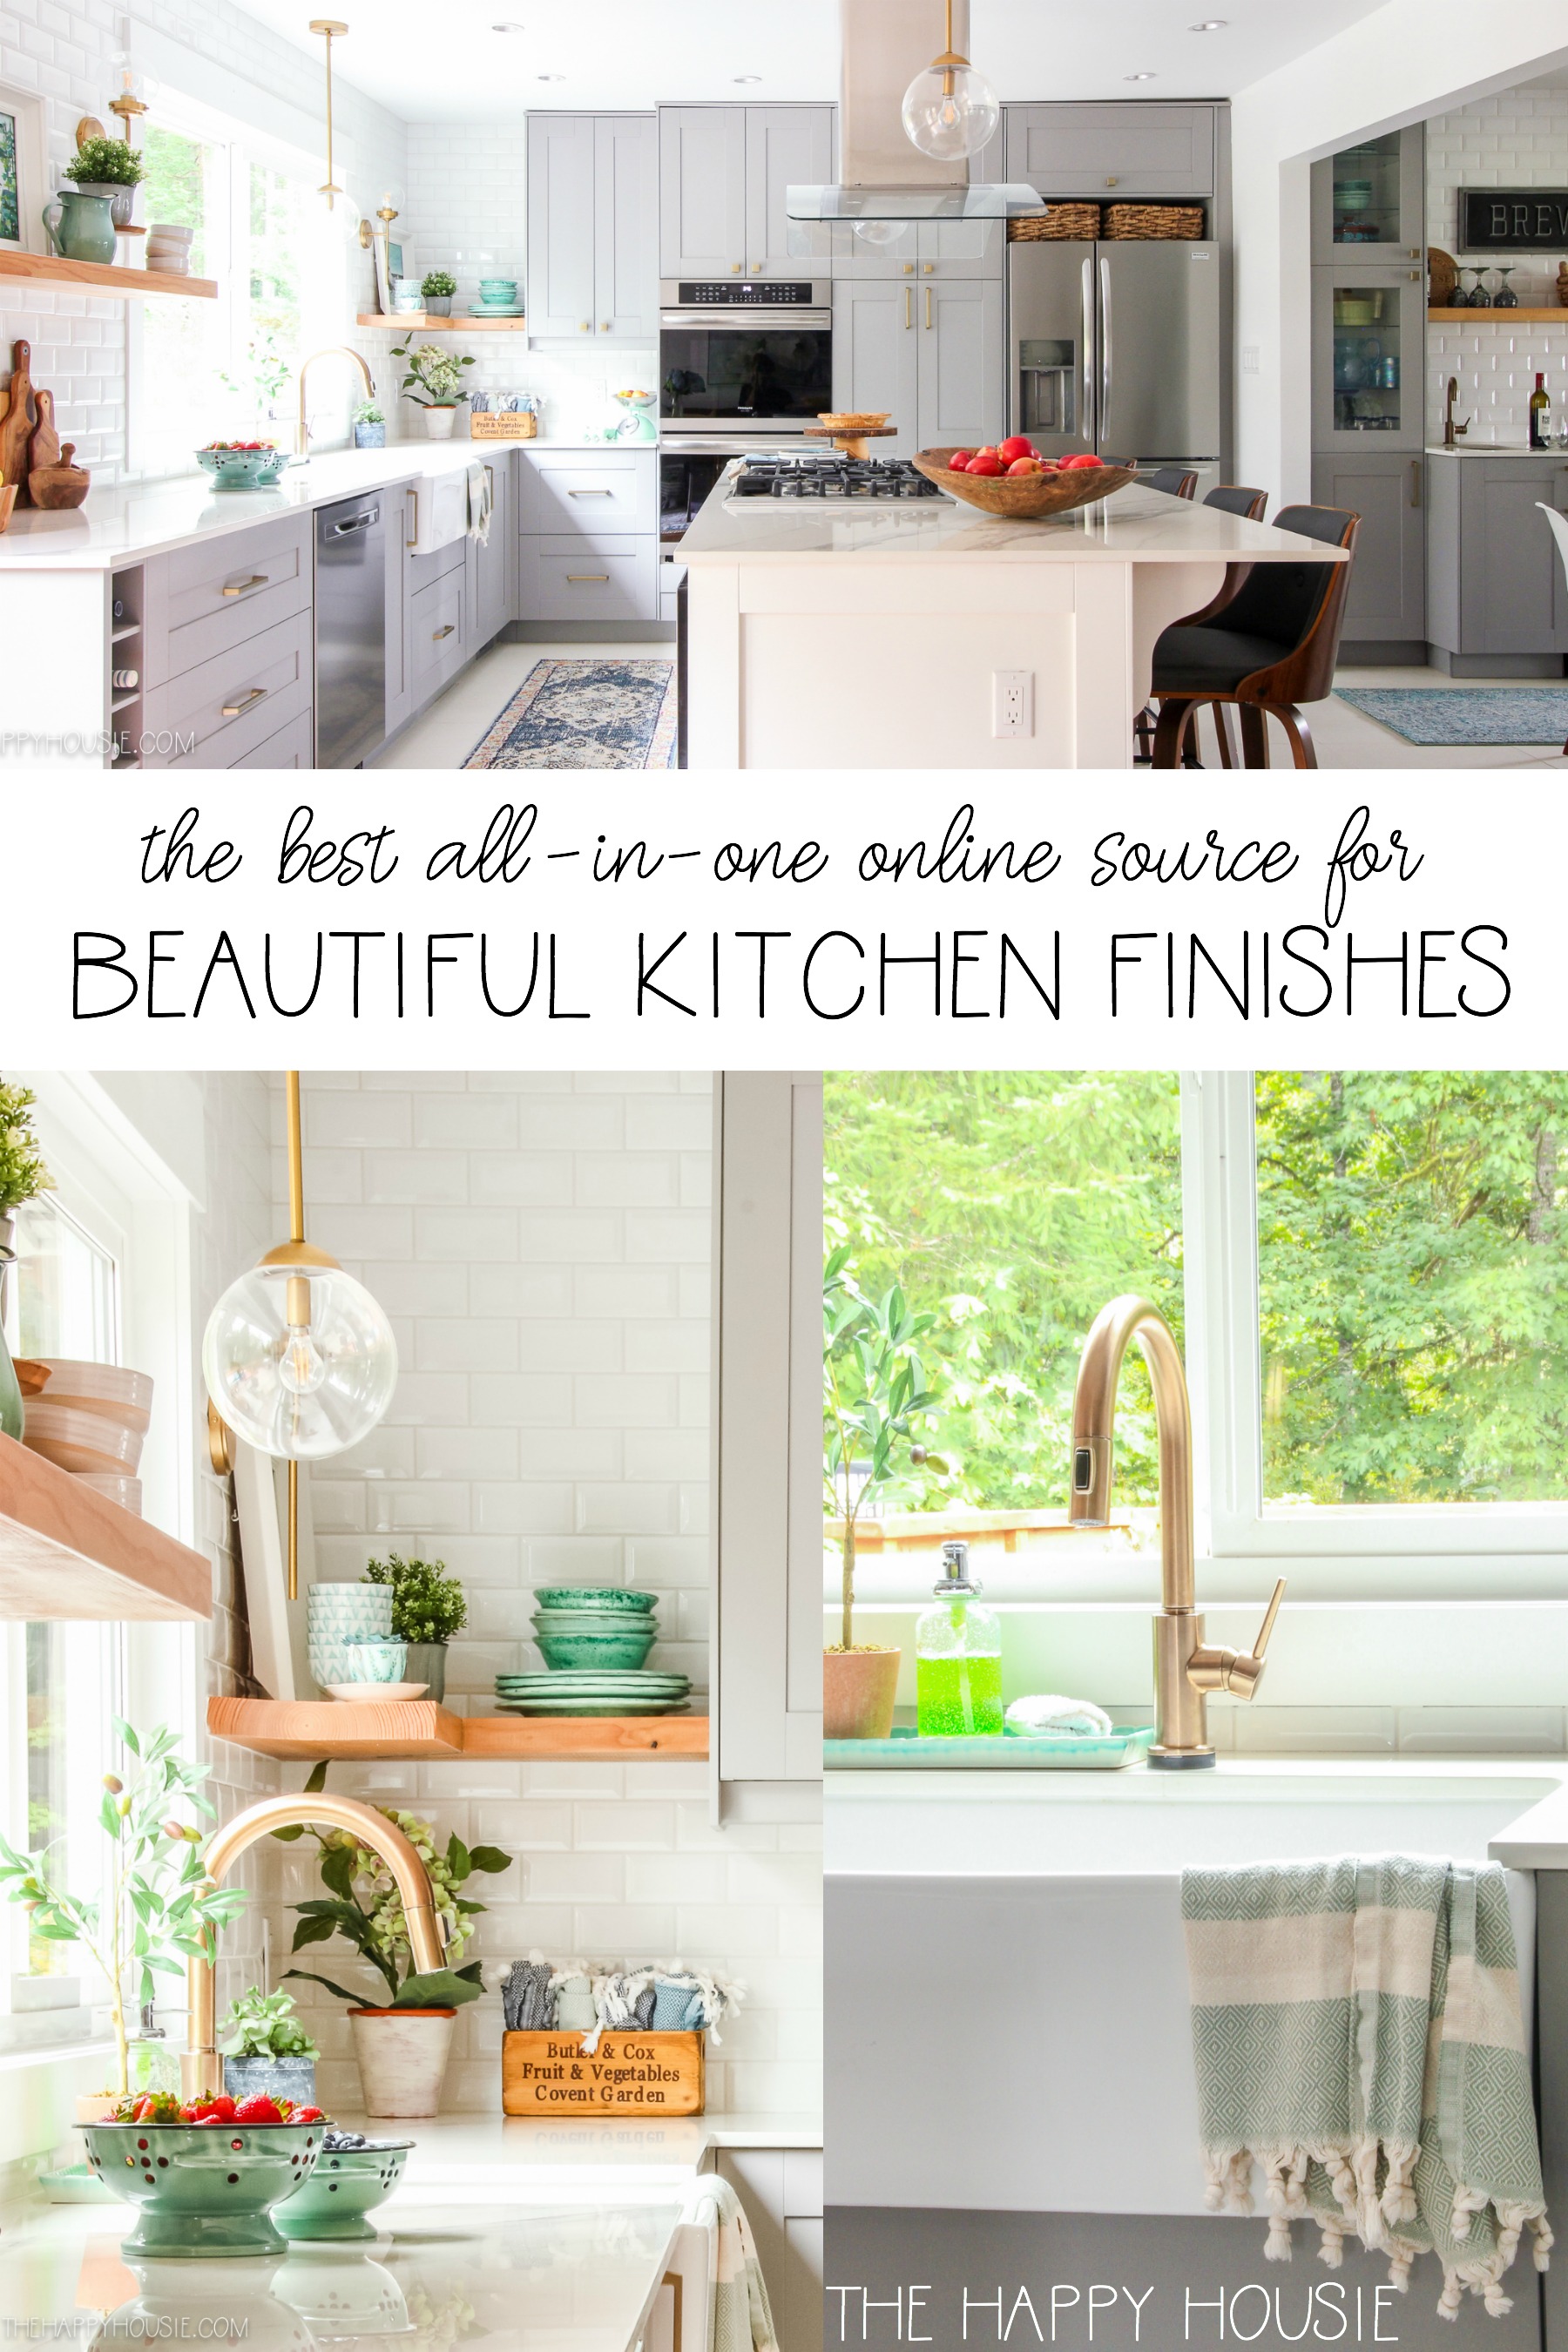 Beautiful Kitchen Finishes graphic.